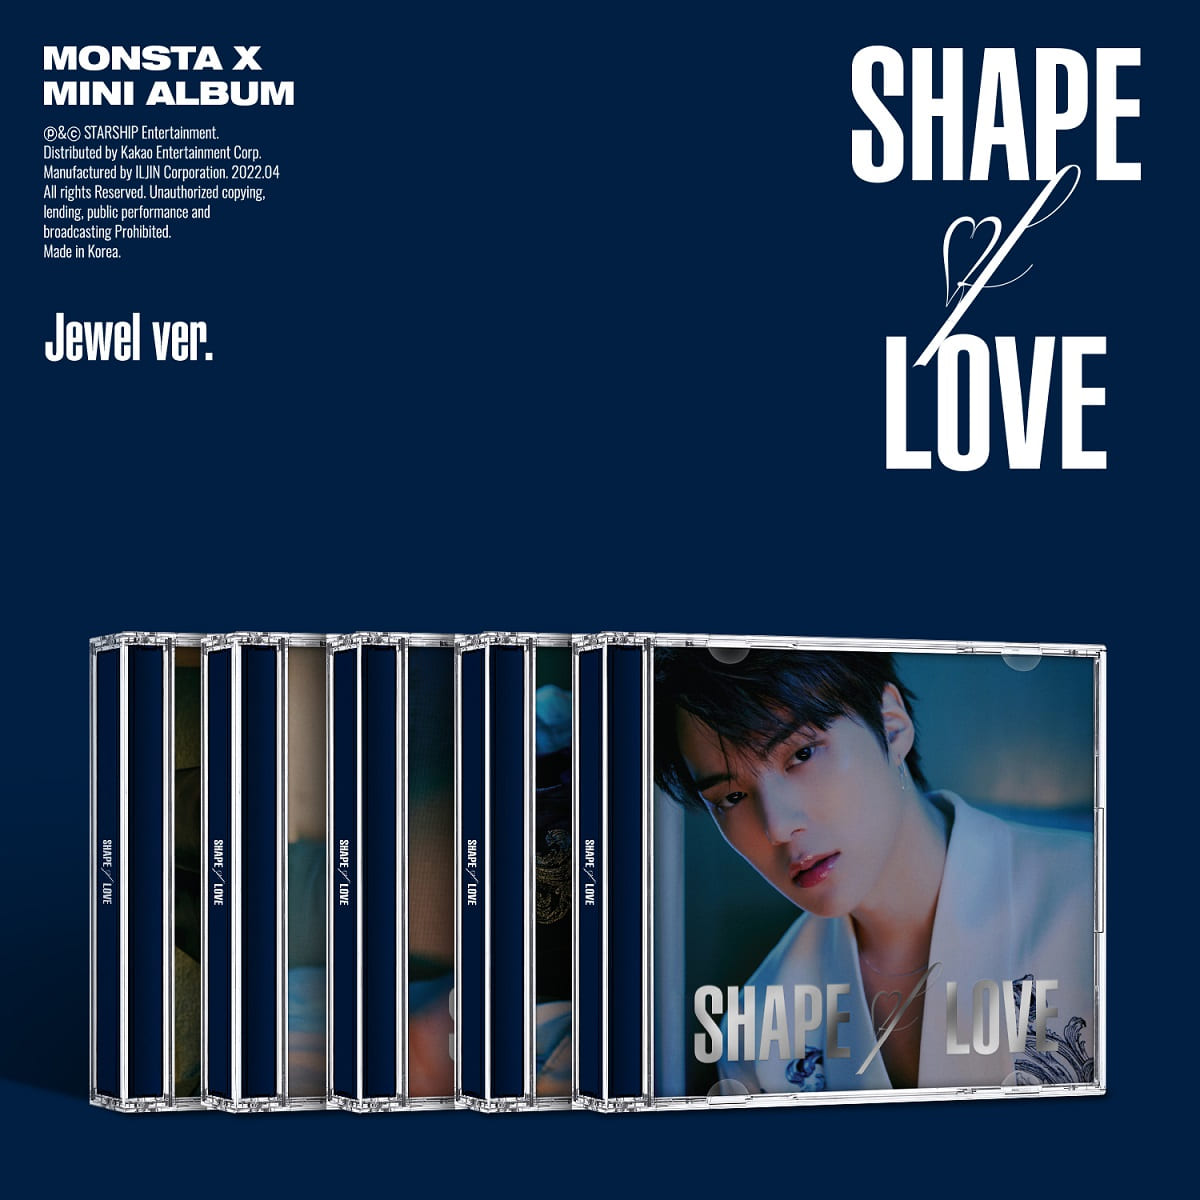 MONSTA X 11th Mini [SHAPE of LOVE] (Jewel ver.) (5 ver.) 🇰🇷